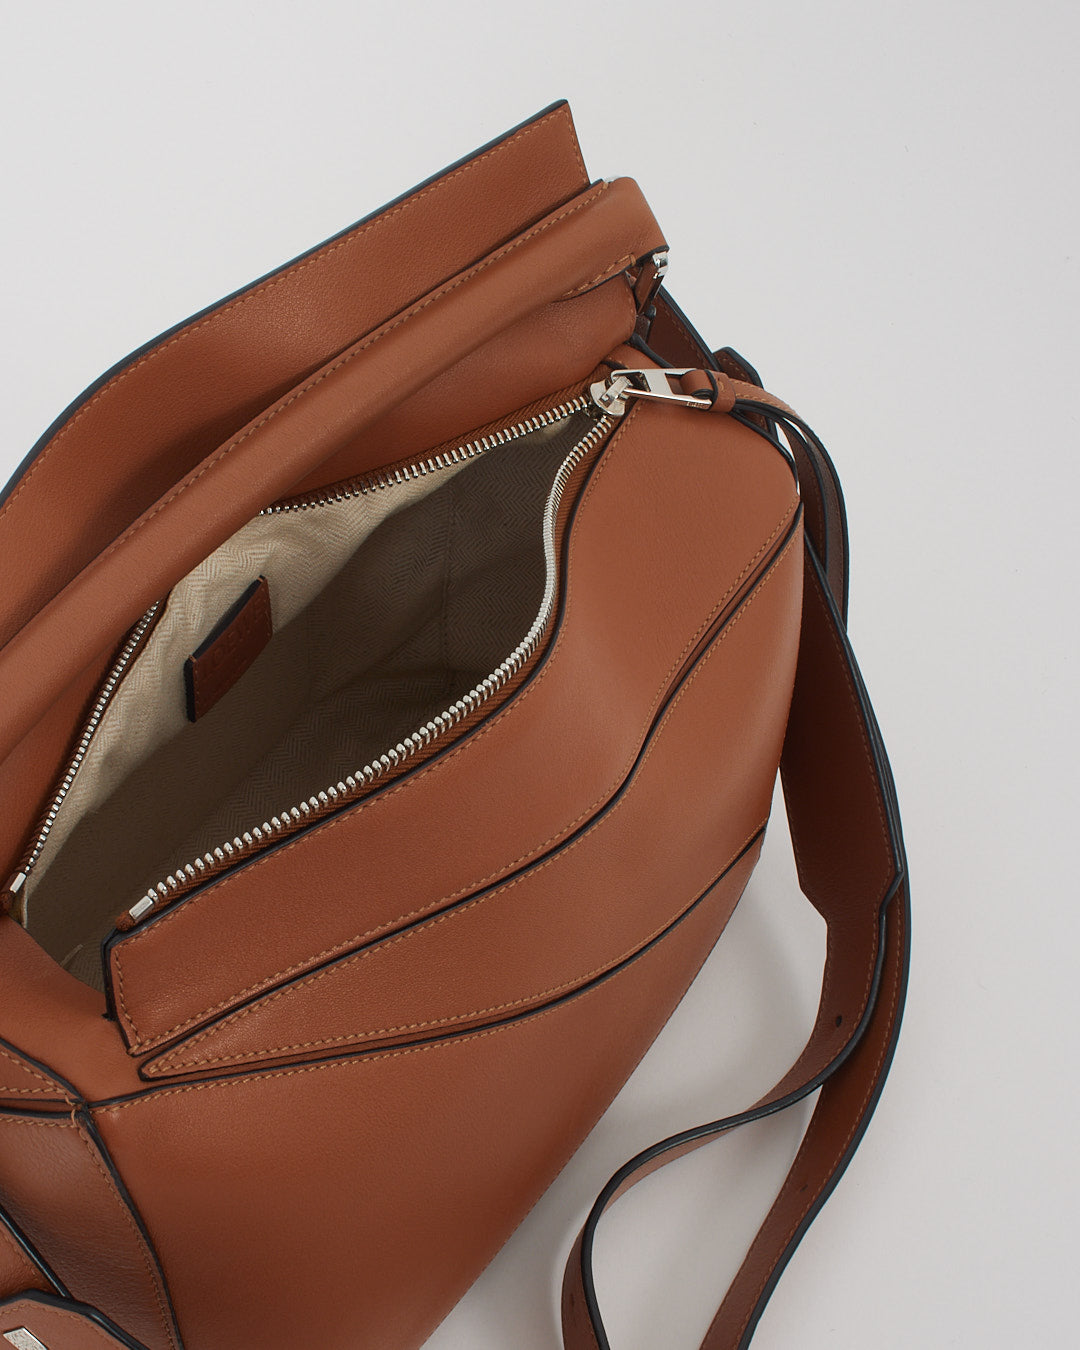 Loewe Tan/Brown Leather Medium Puzzle Bag